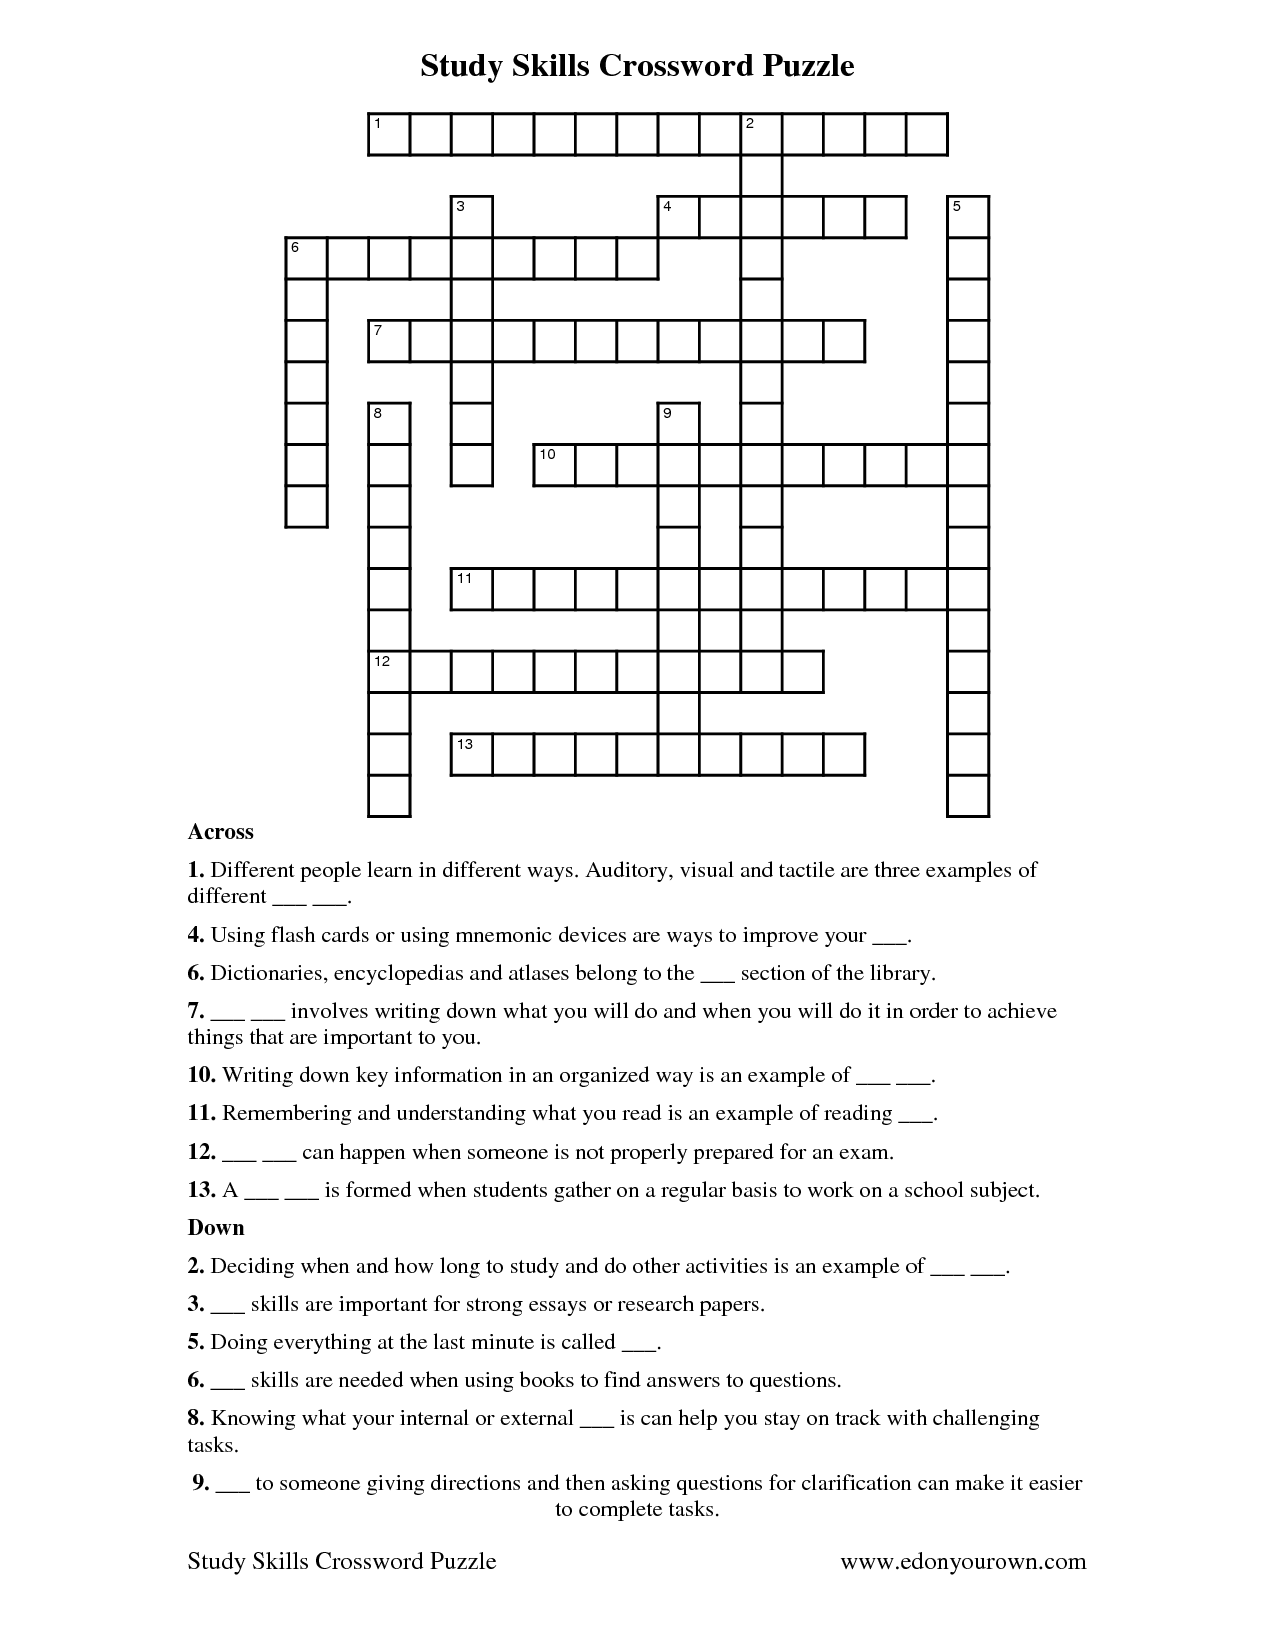 Study Skills Crossword Puzzle